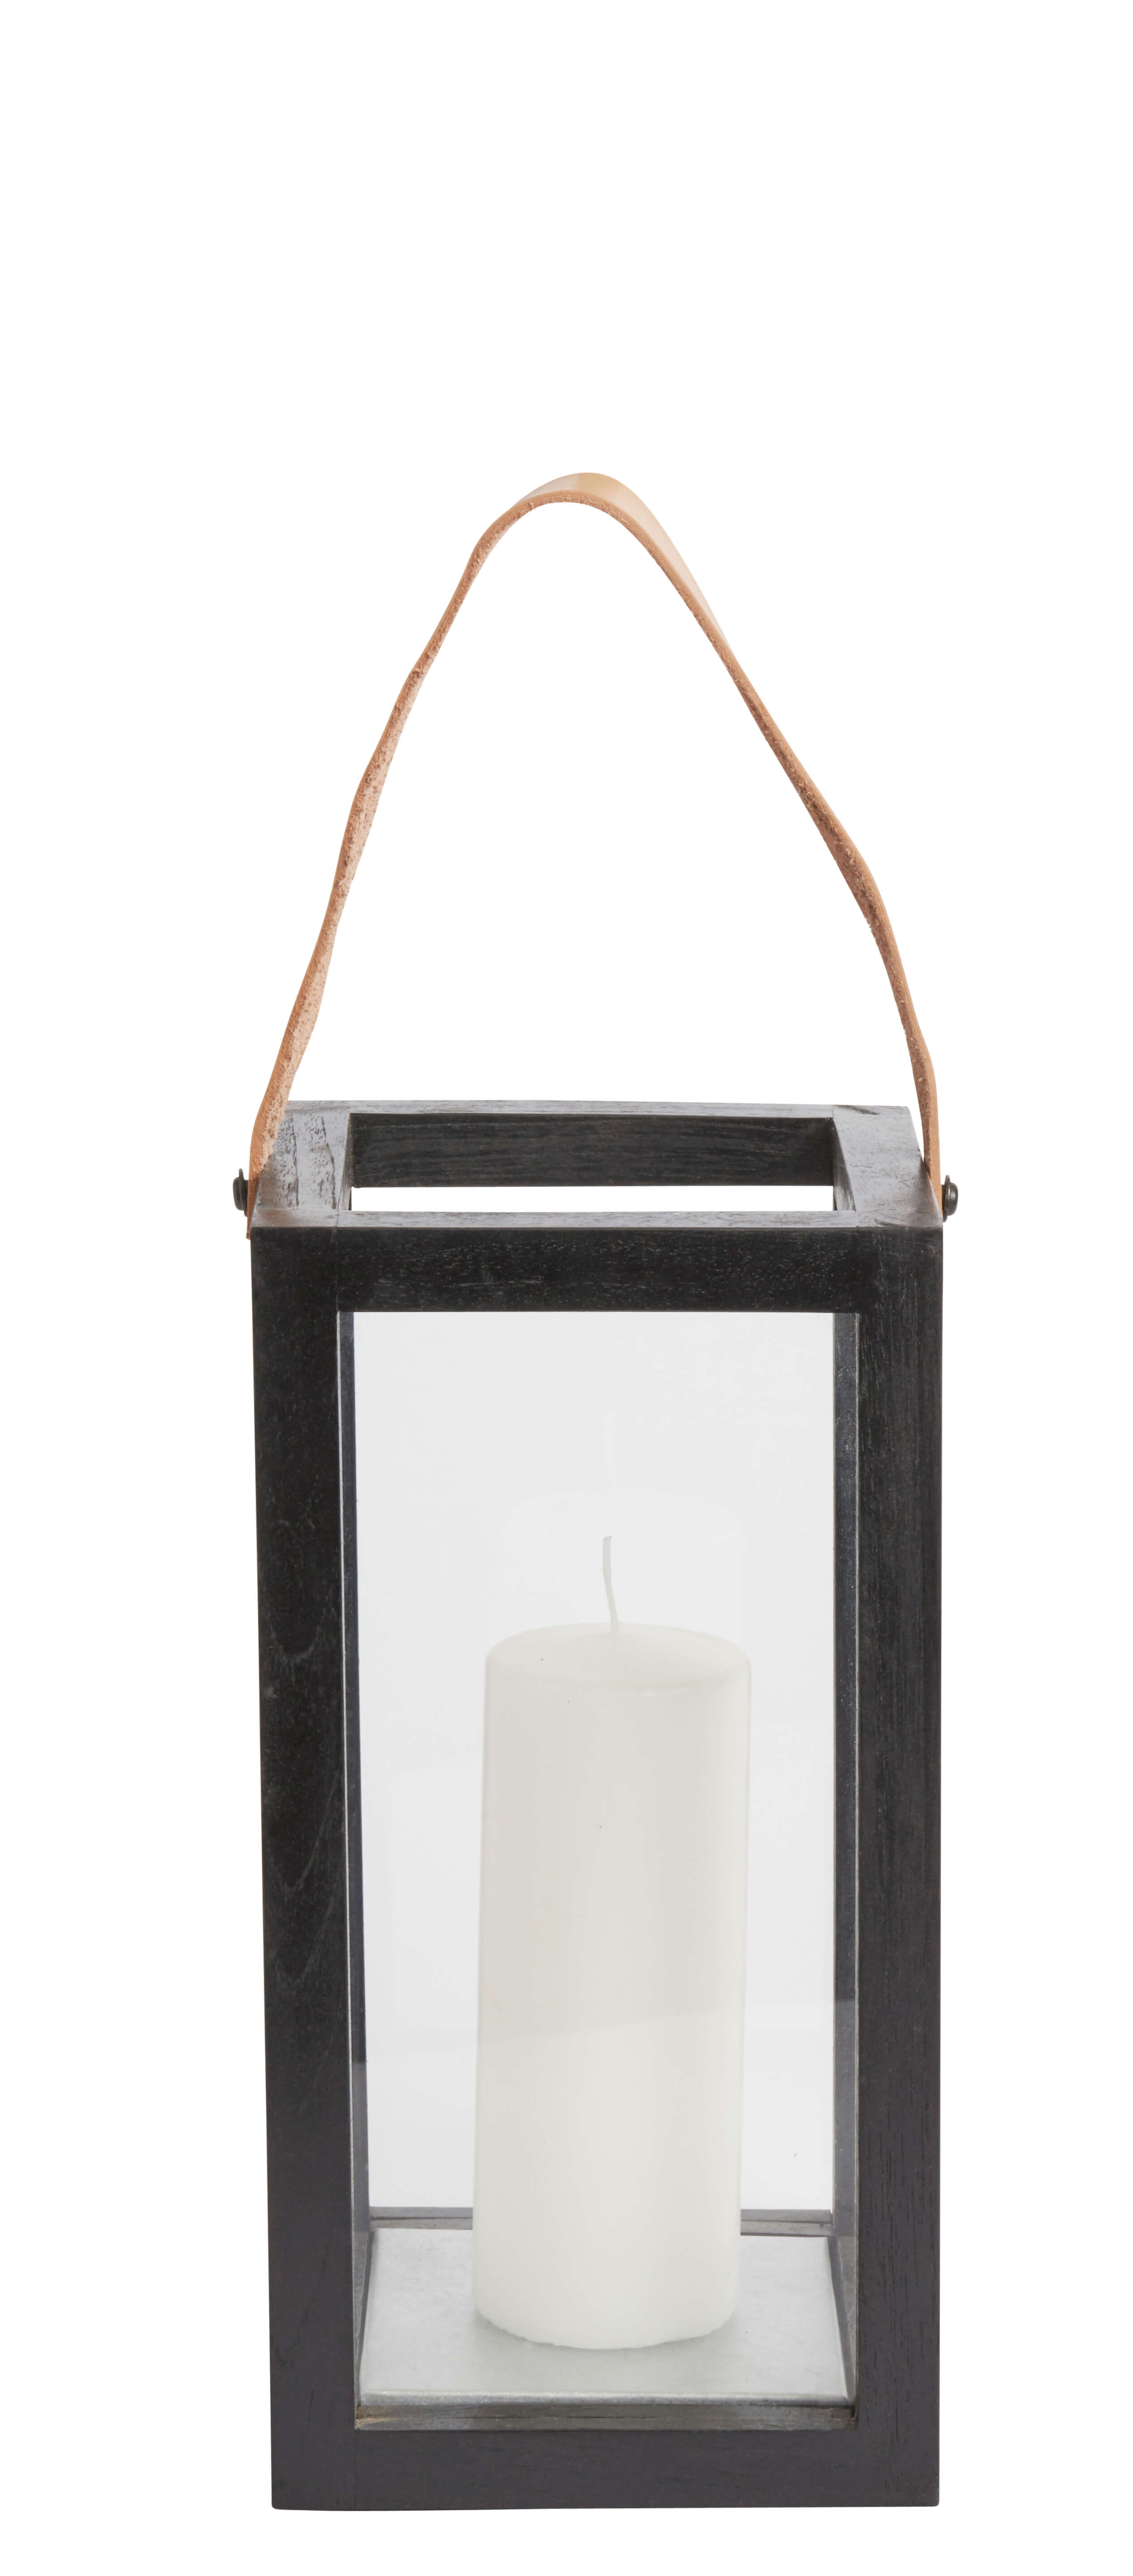 Muubs - Lantern Small - Black Recycled Teak (1121527502)